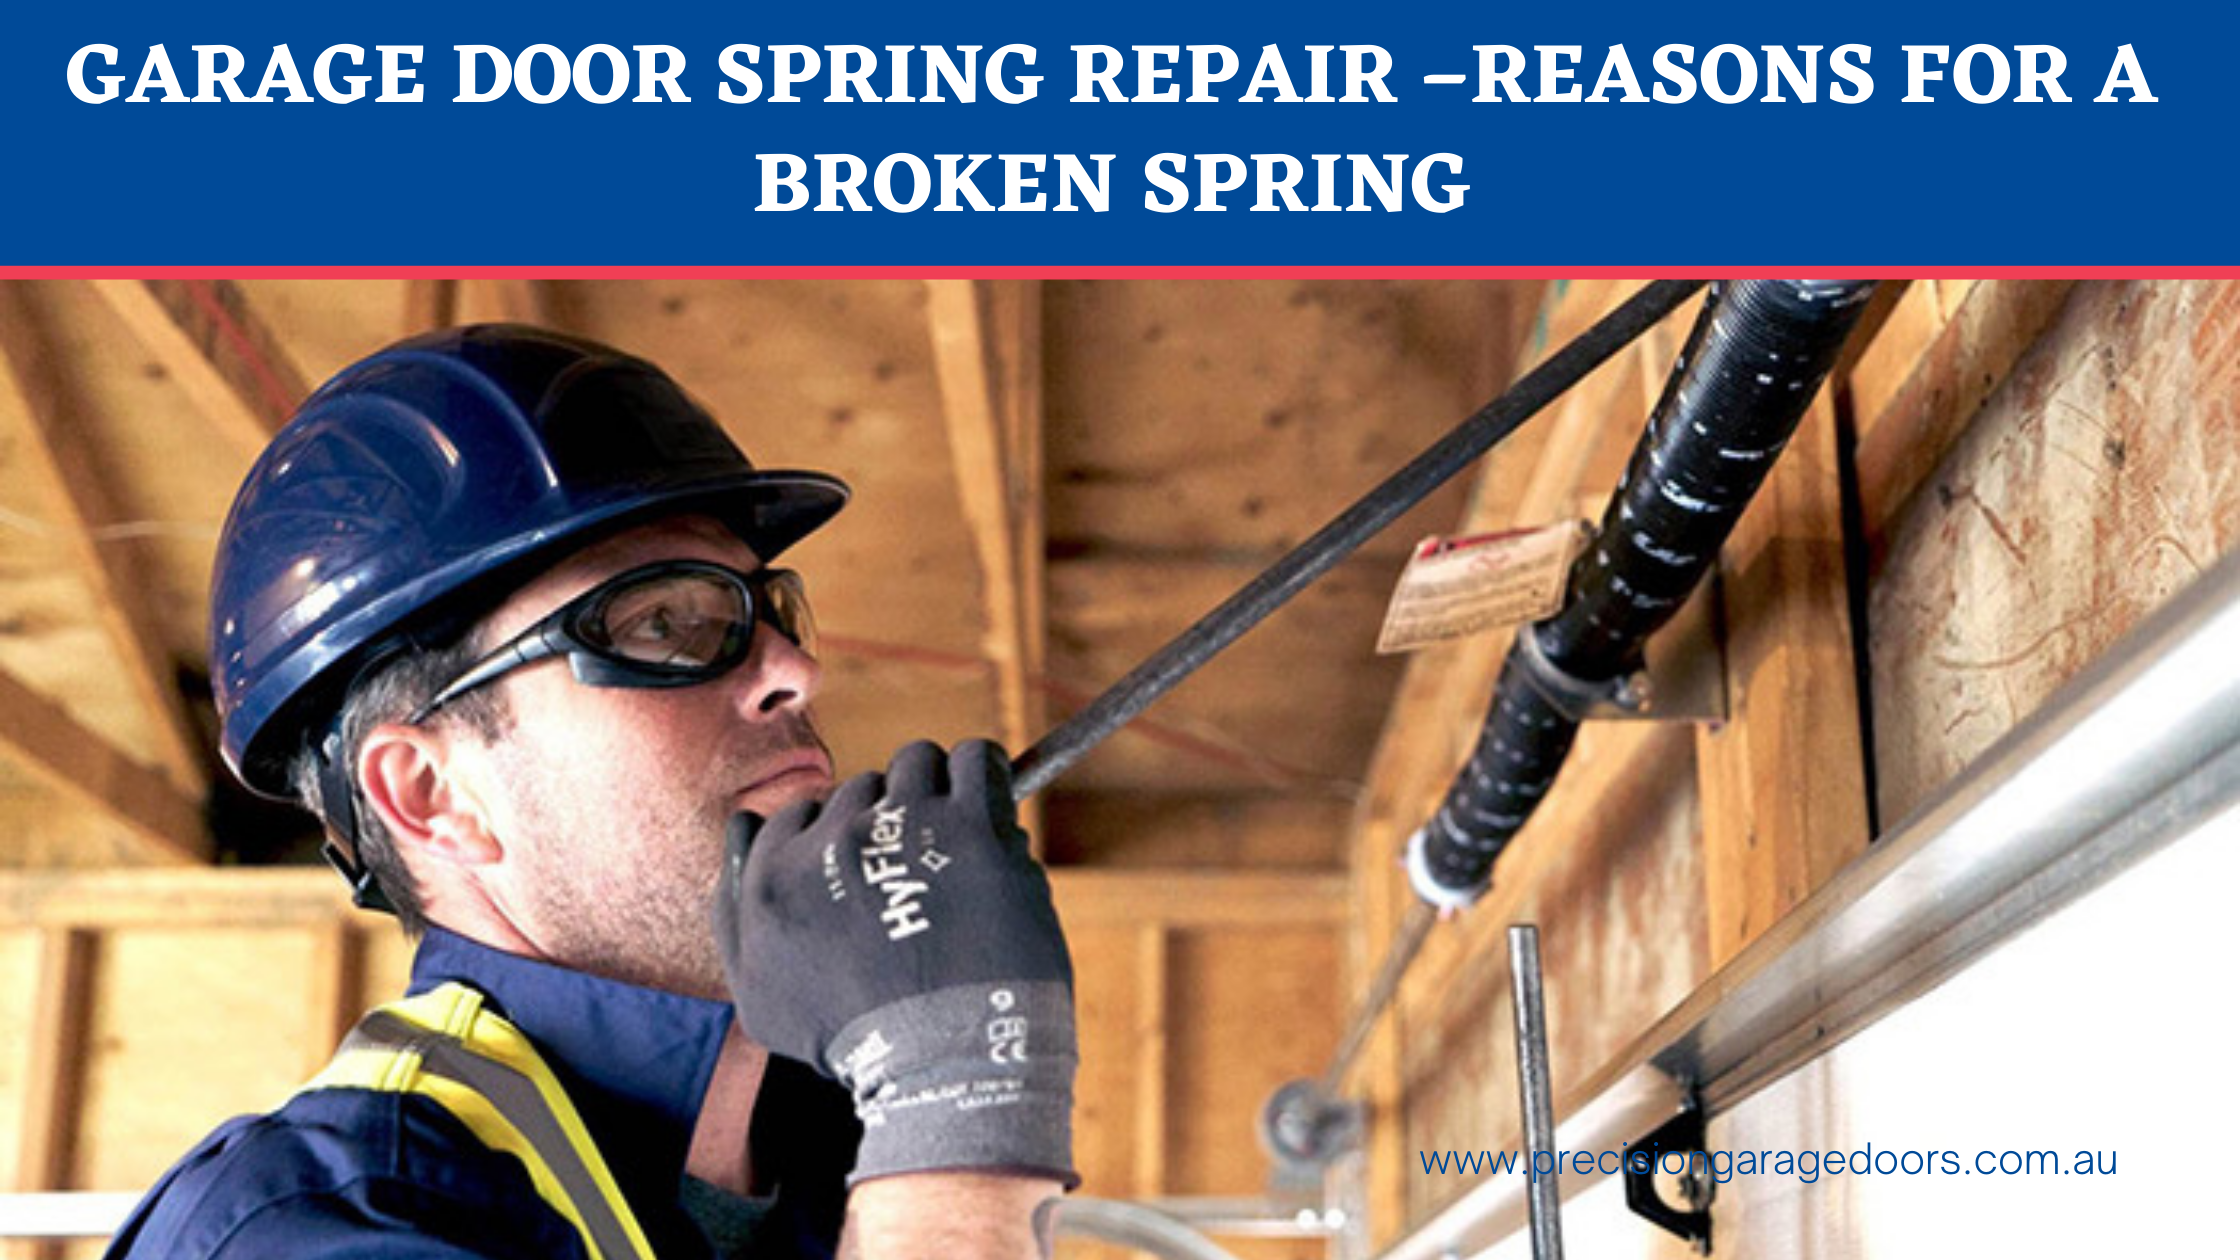 Garage Door Spring Repair –Reasons for a Broken Spring